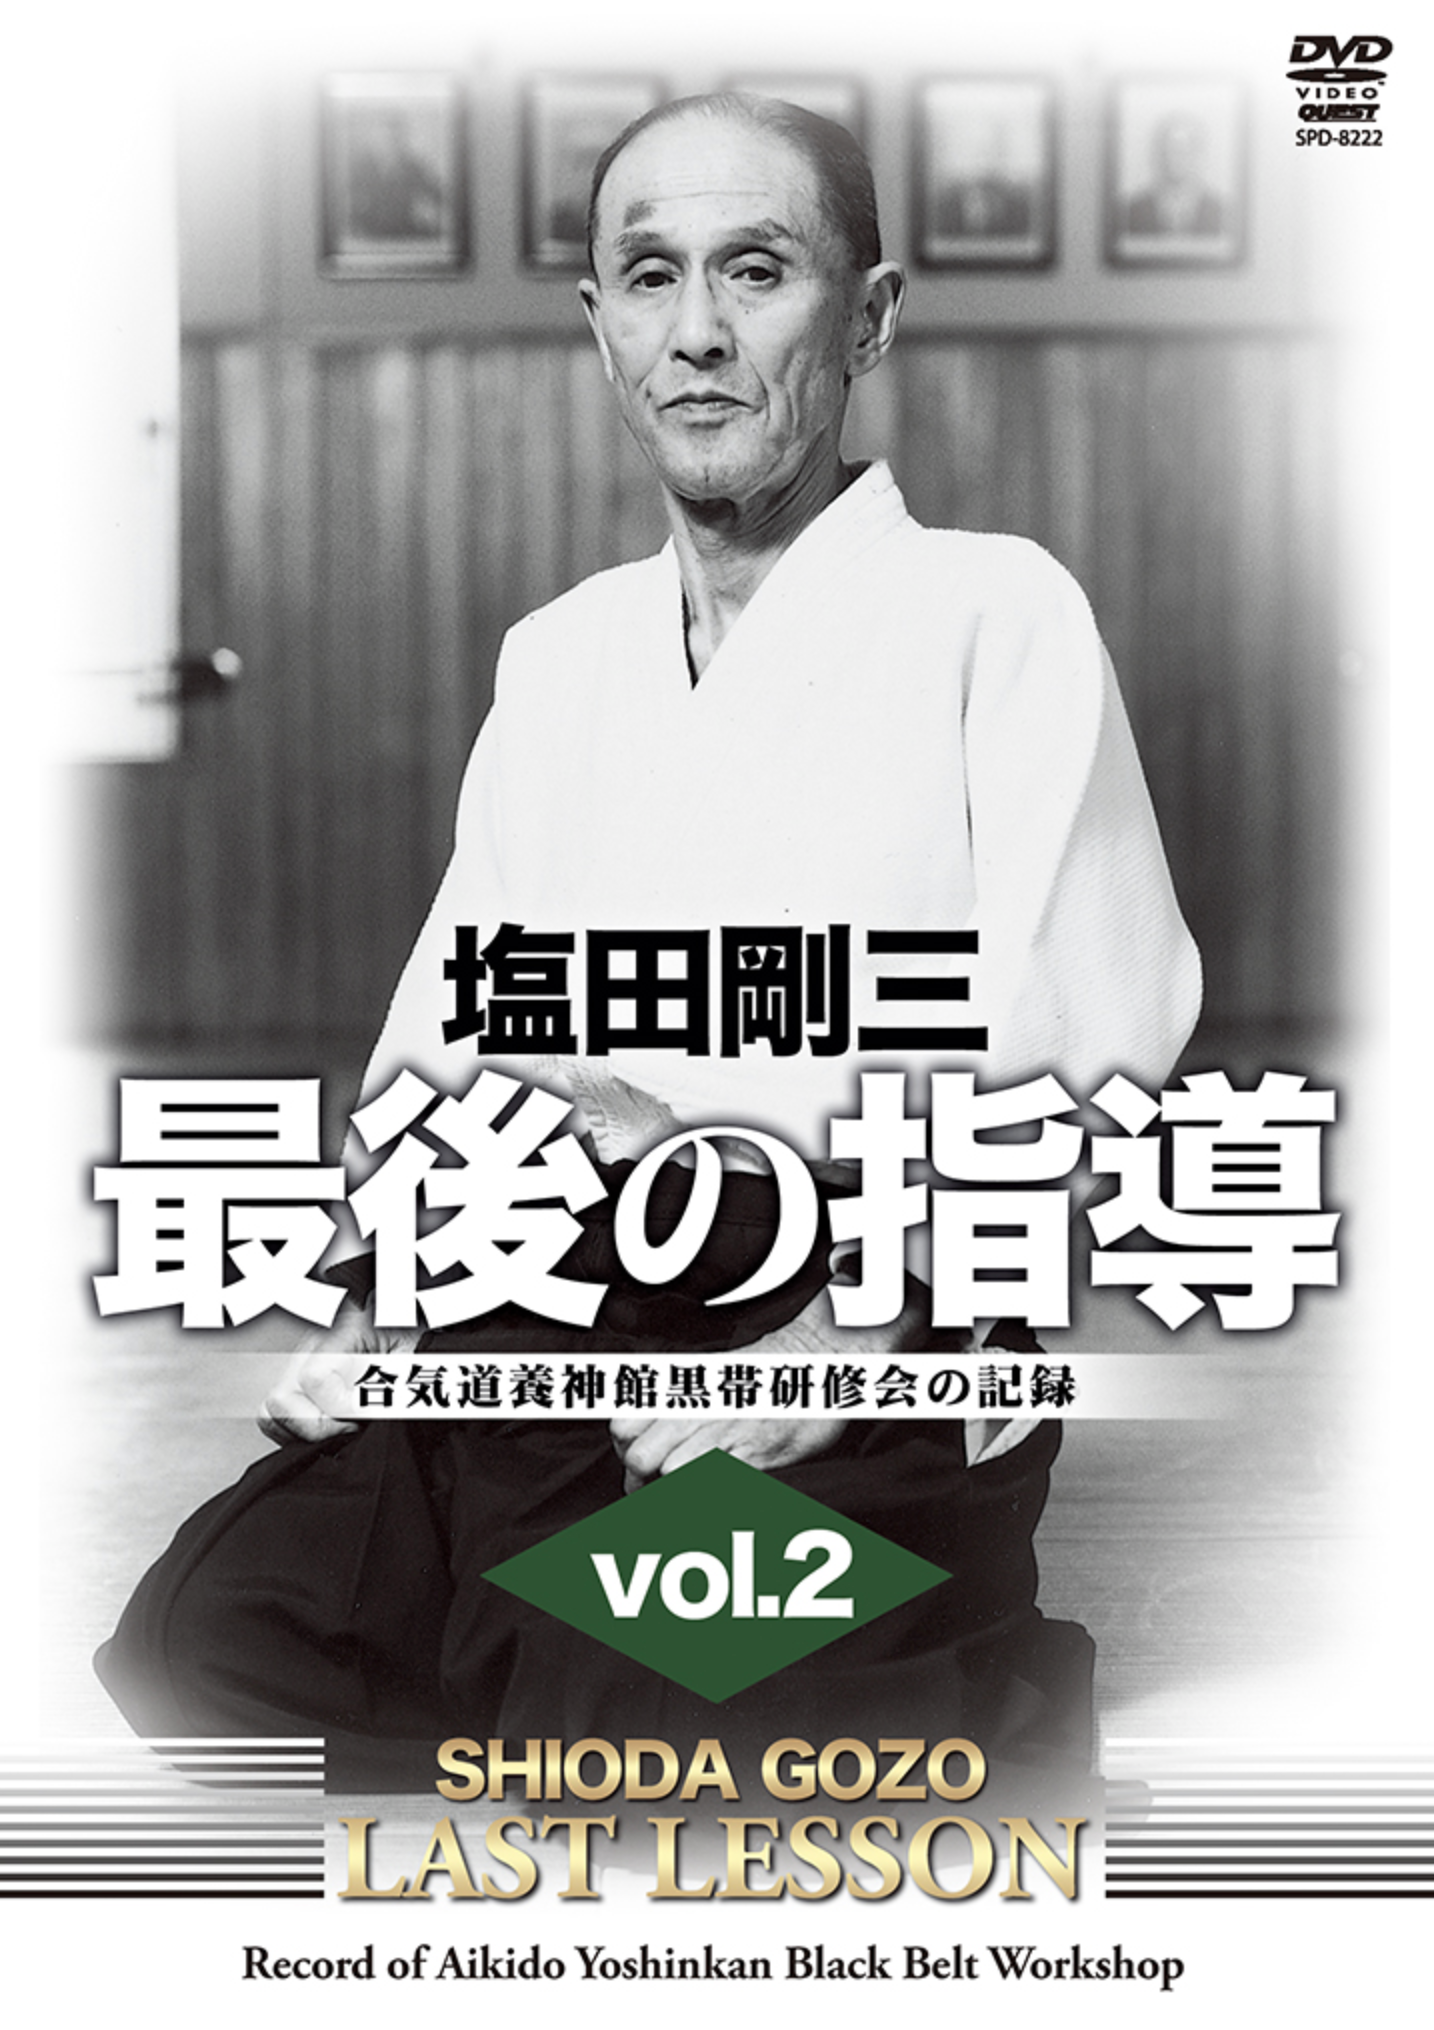 Gozo Shioda Last Lesson DVD 2 Yoshinkan Aikido - Budovideos Inc